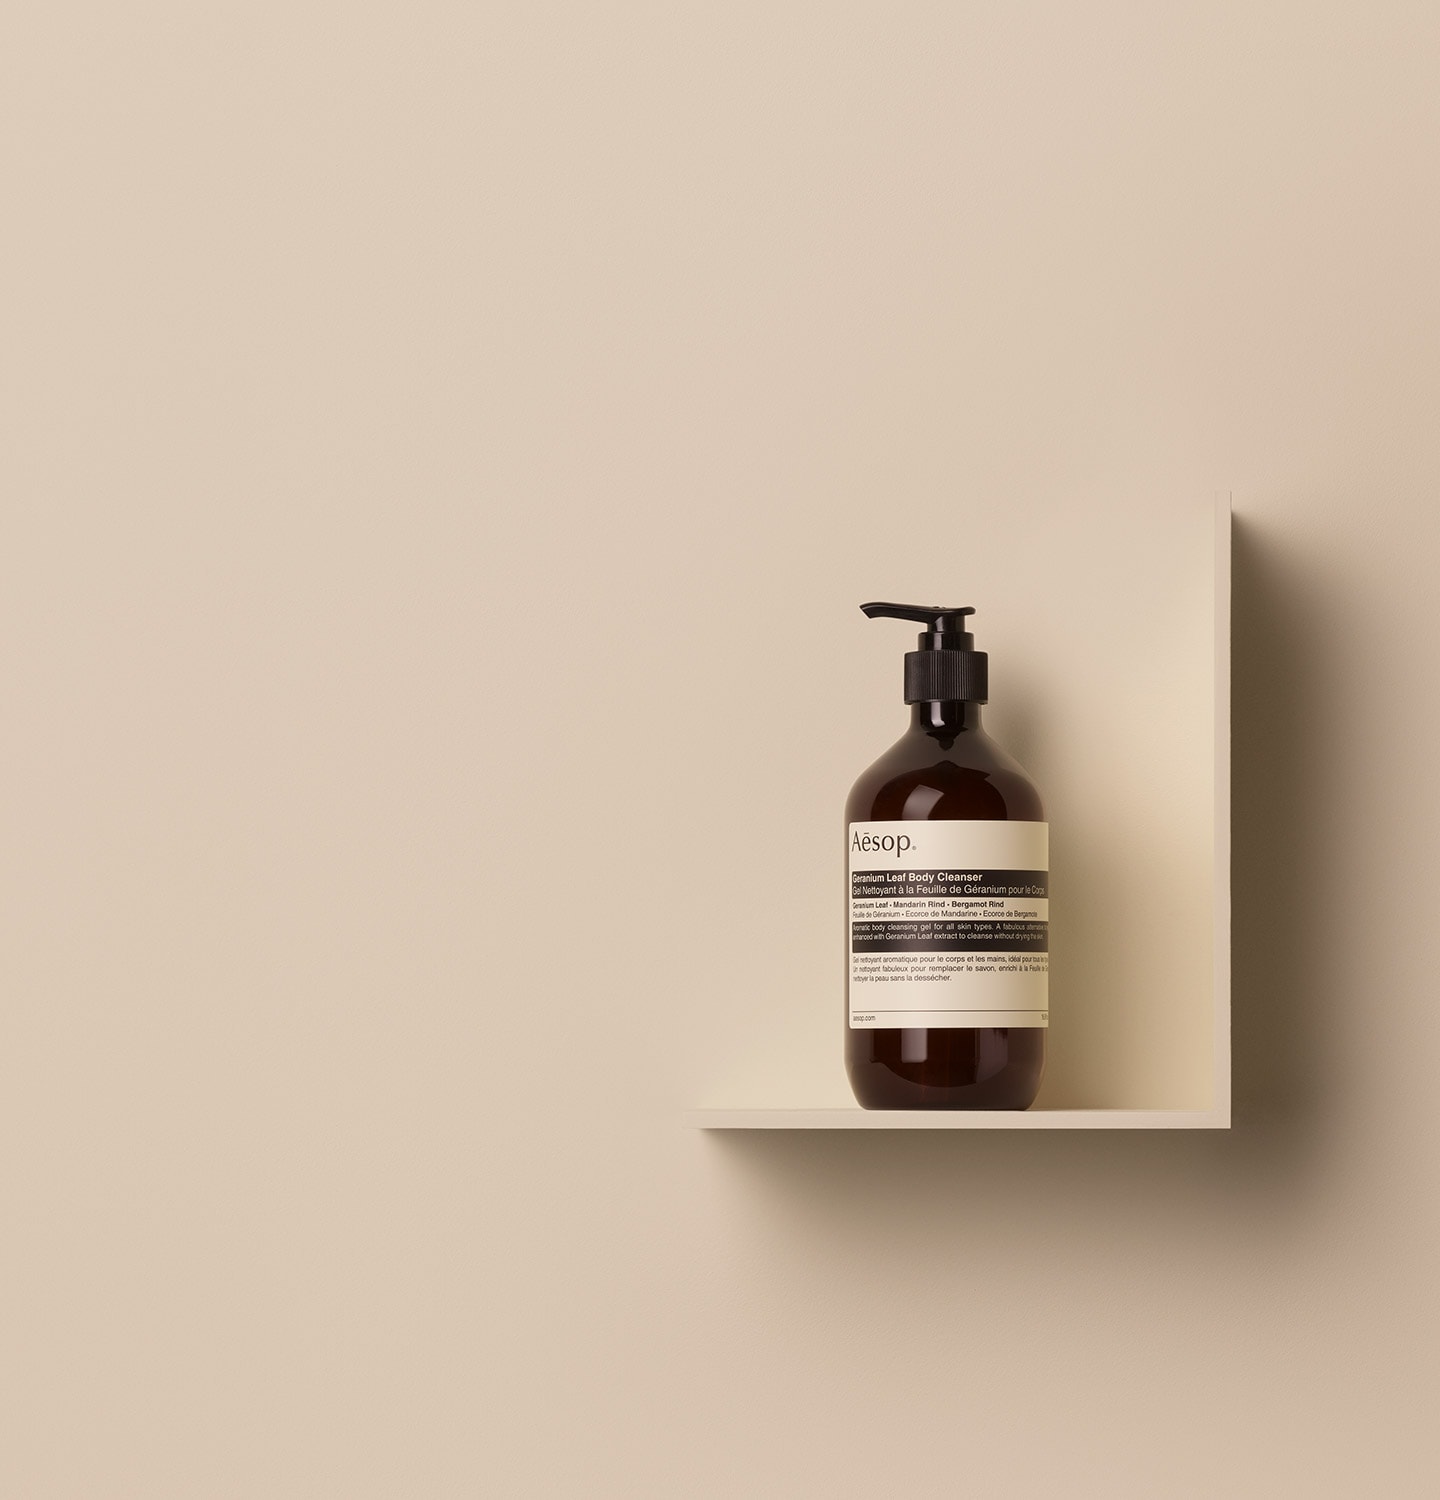 Aesop Geranium Leaf Body Cleanser in 500ml amber pump bottle, placed on a shelf in a beige background